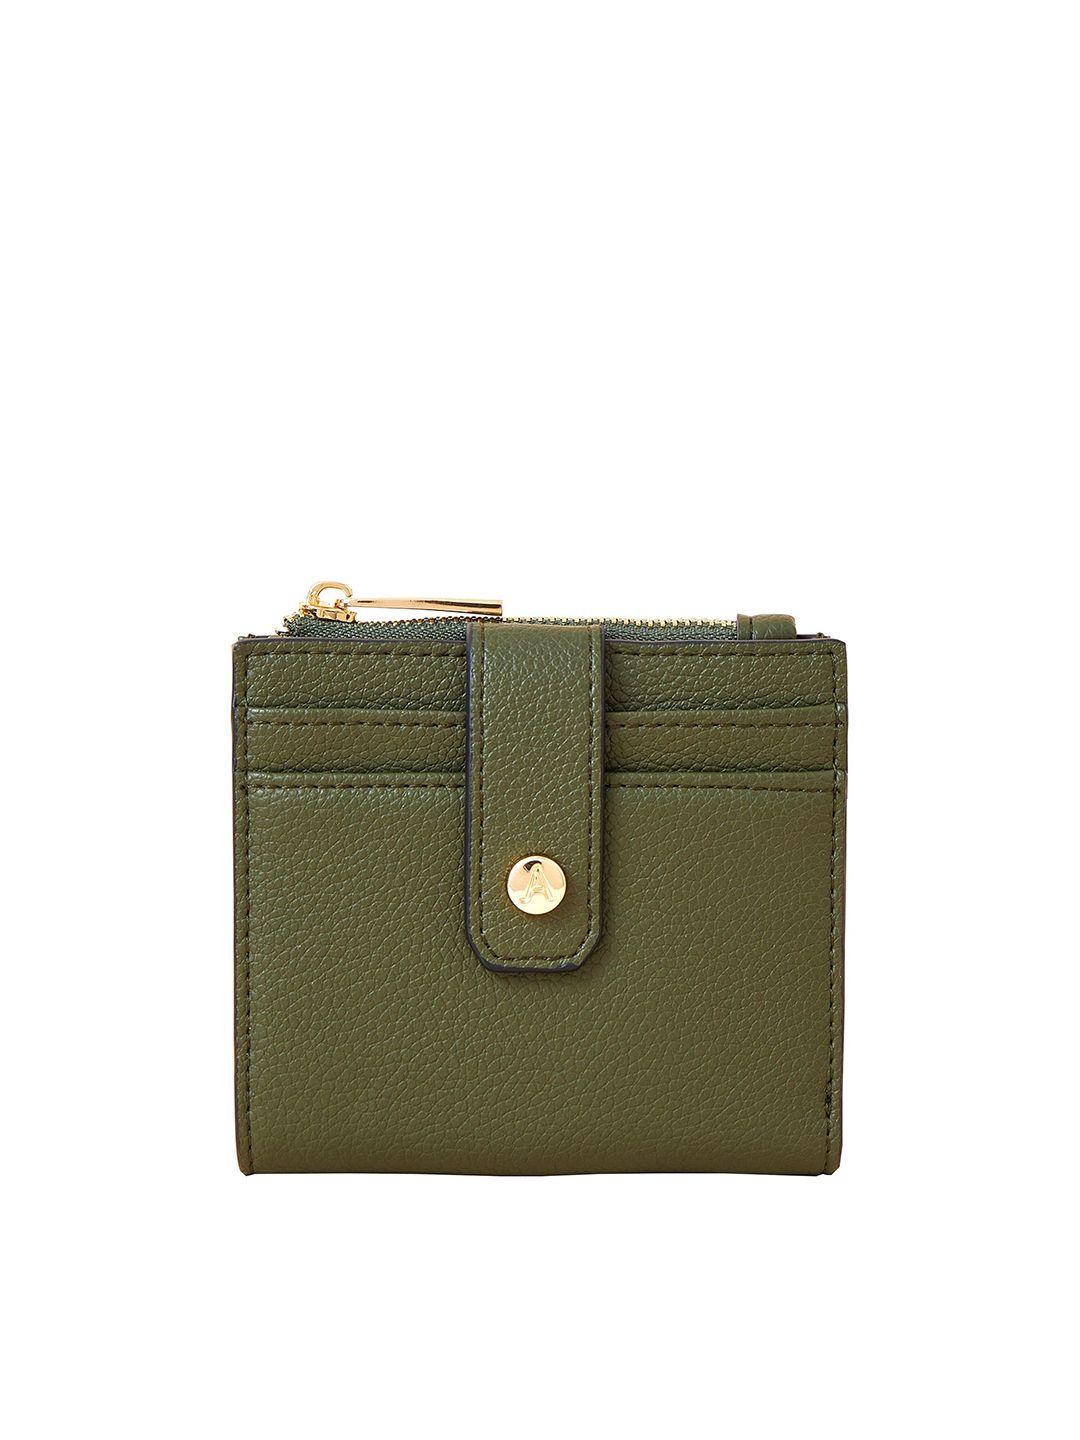 accessorize women olive green textured card holder